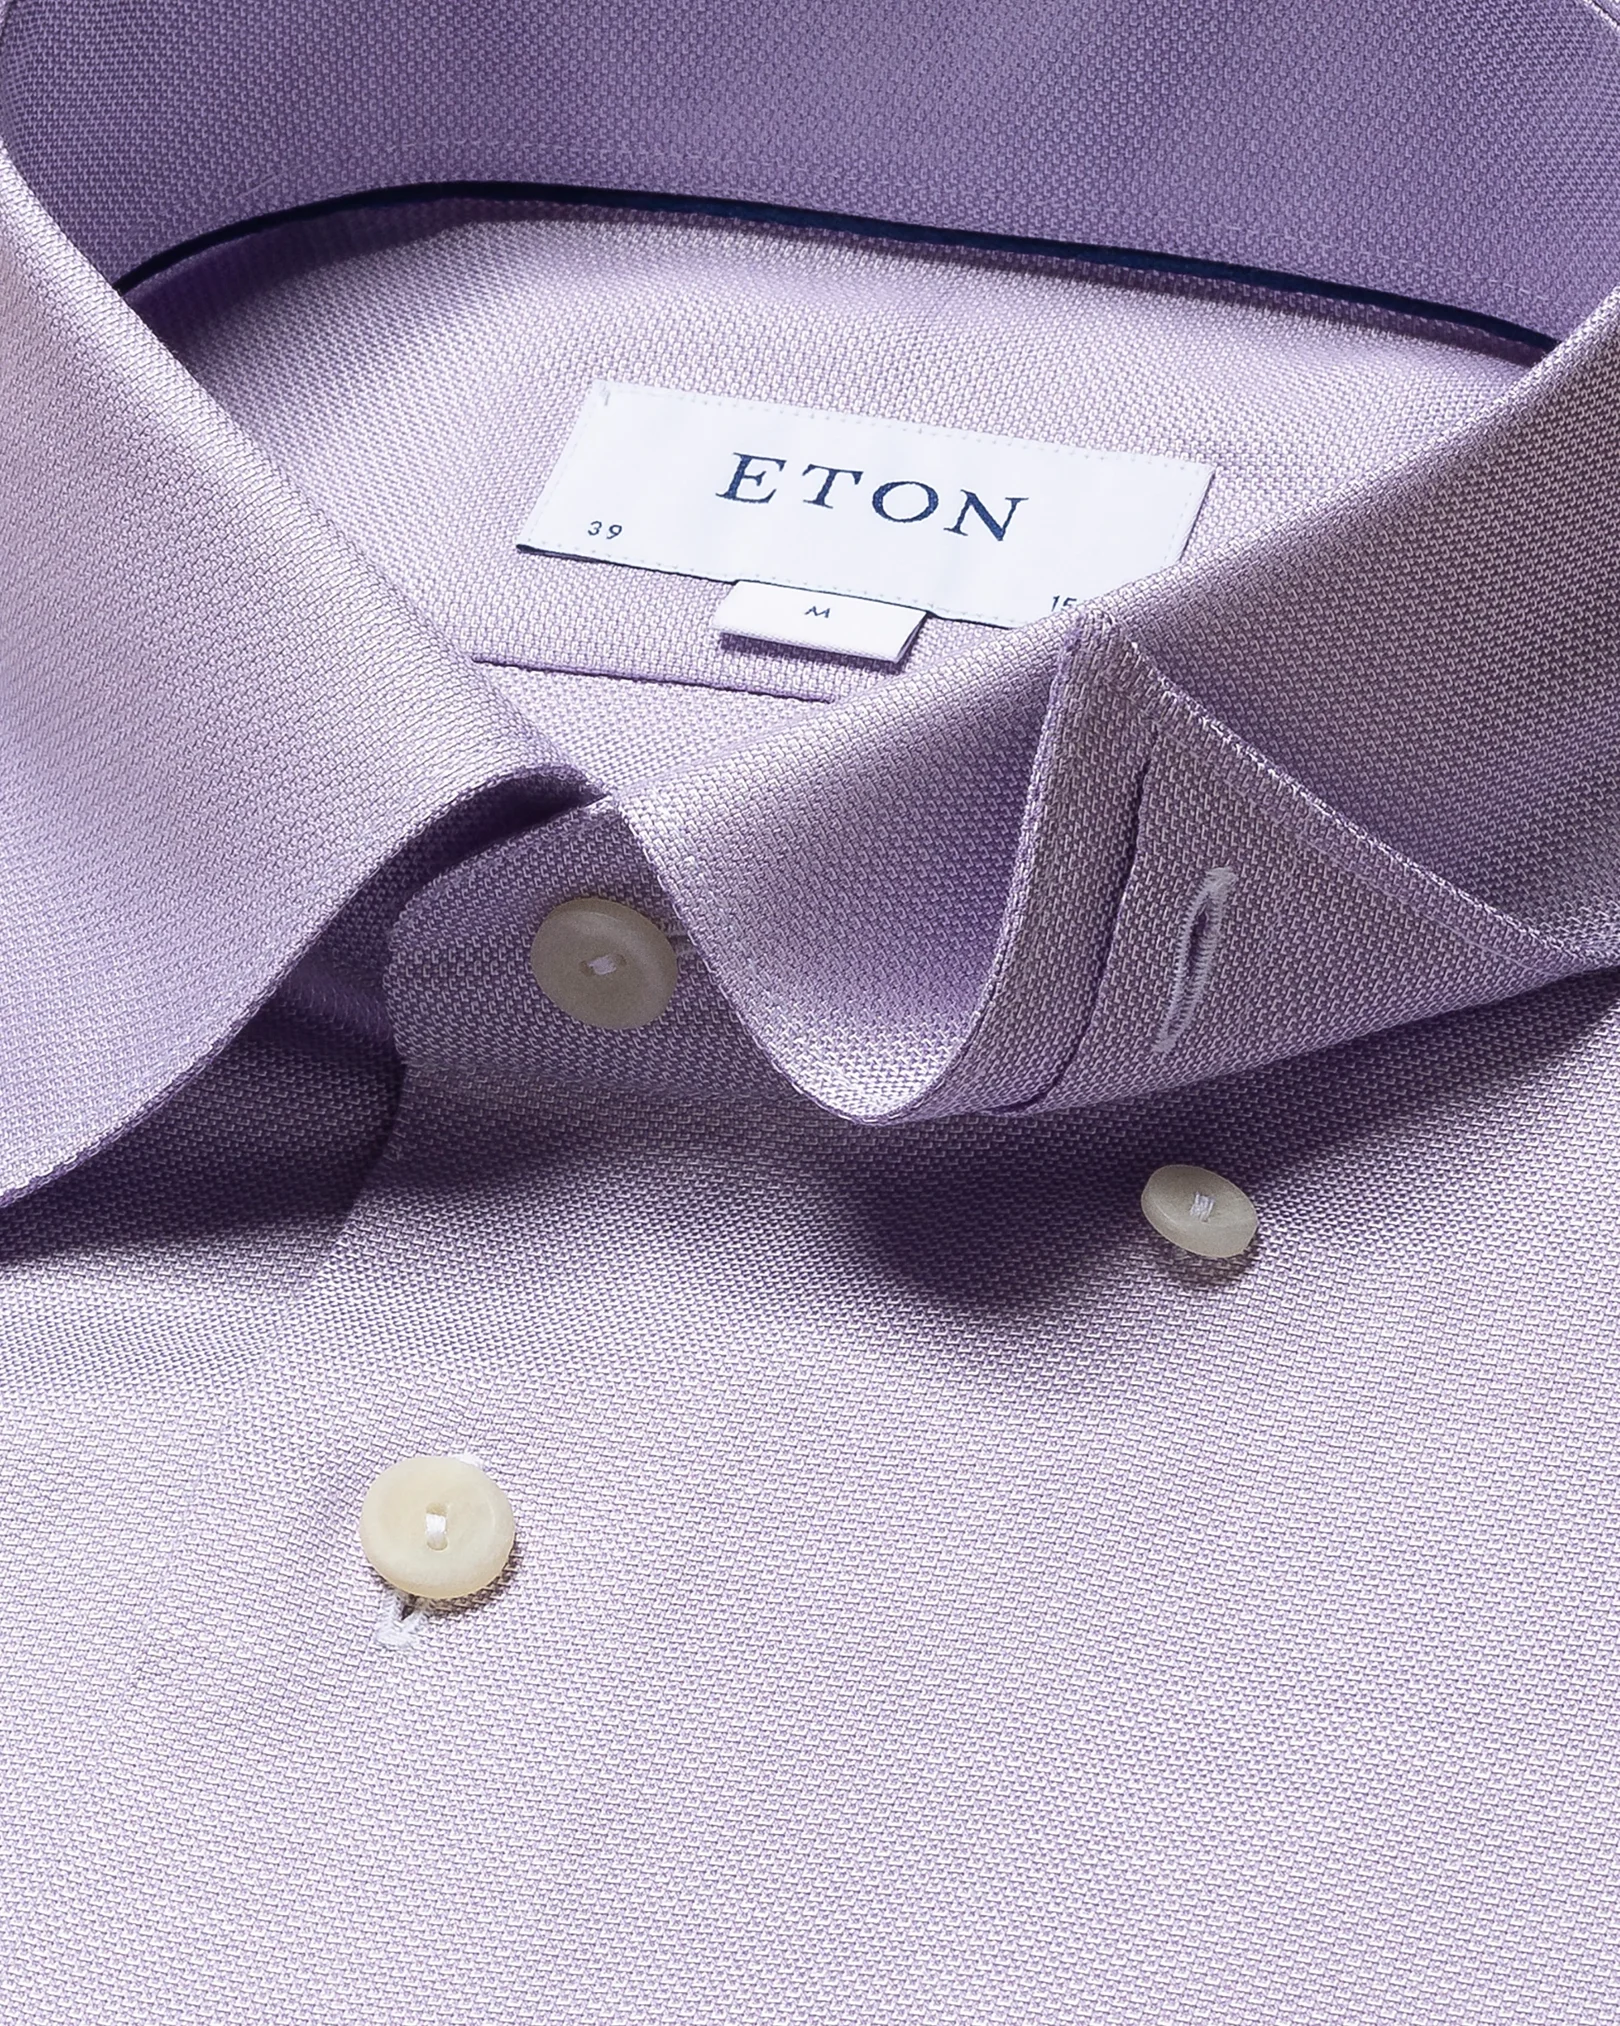 Eton - light purple cotton lyocell stretch